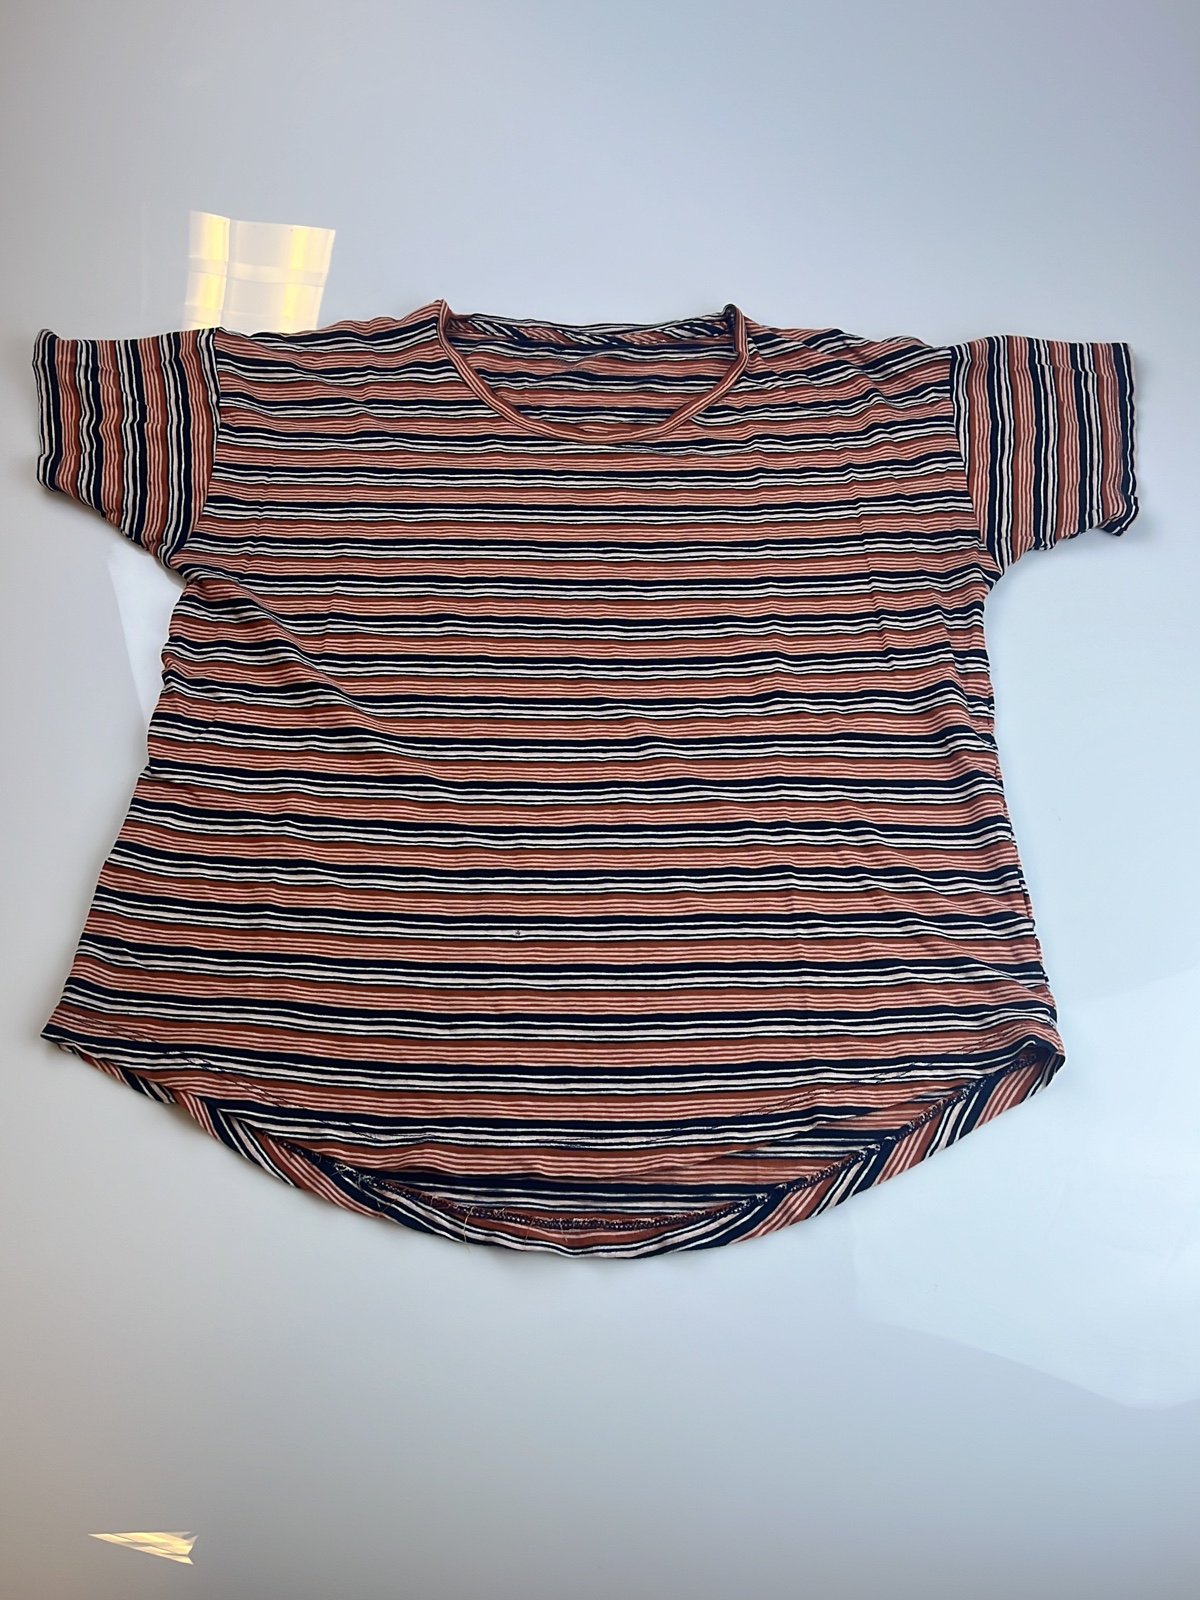 Fashion Madewell Striped Shirt S25-34 gRLfRyFha US Outlet